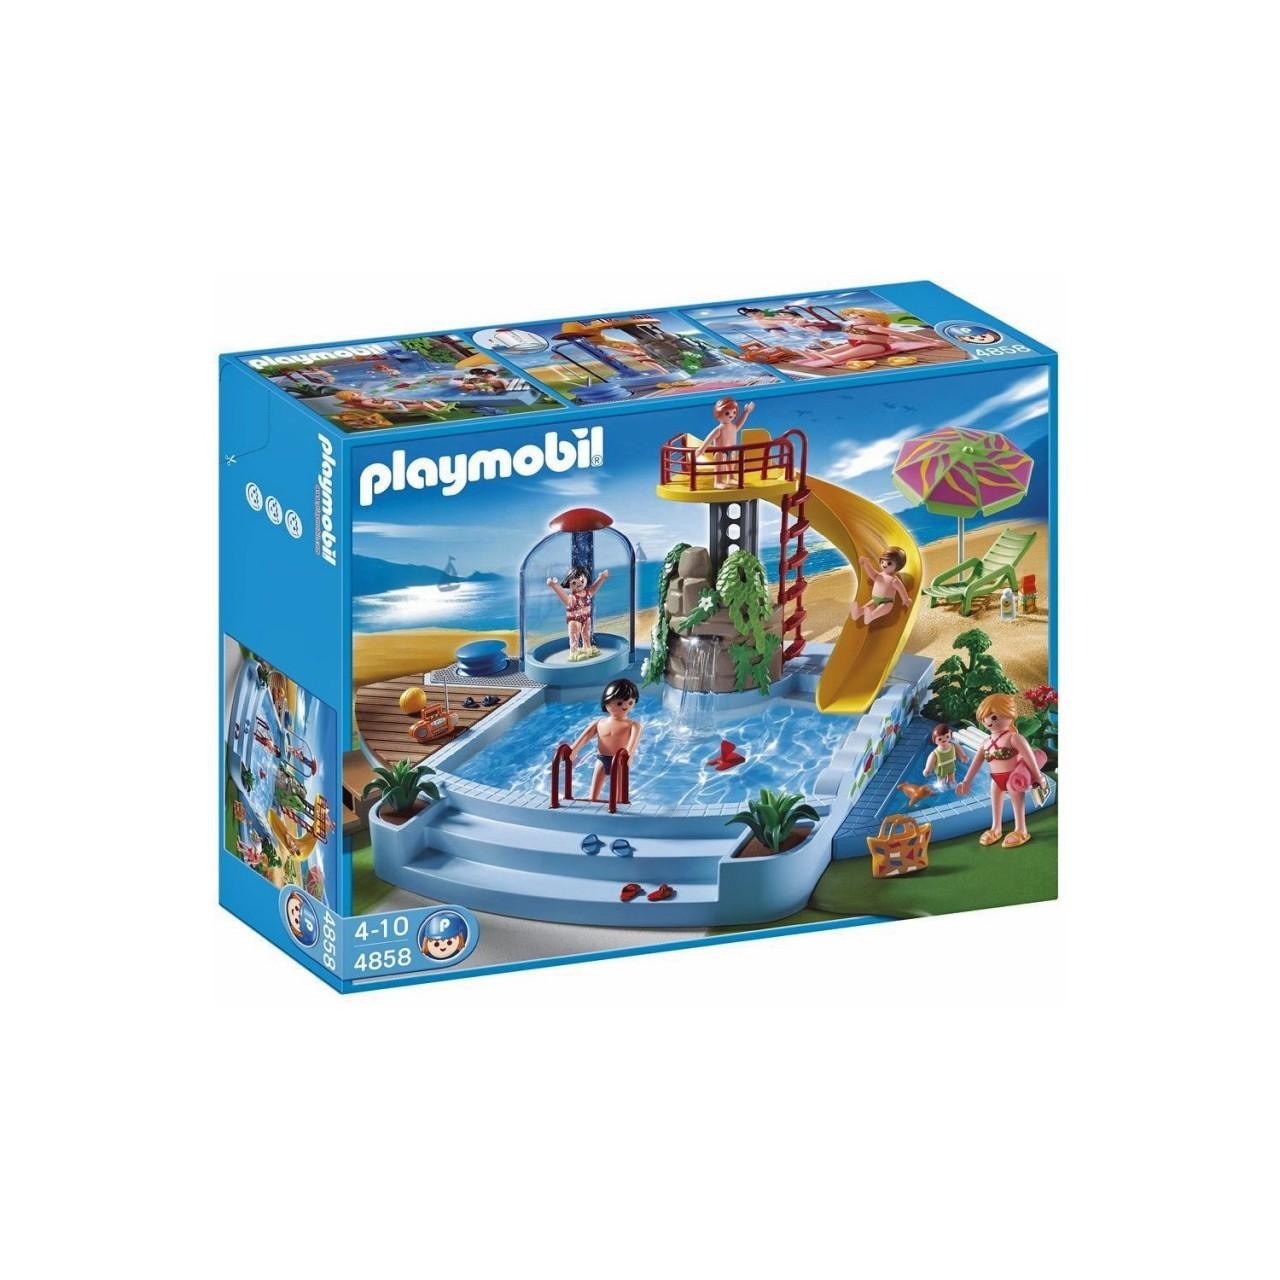 Foto Playmobil 4858 Pool with Water Slide